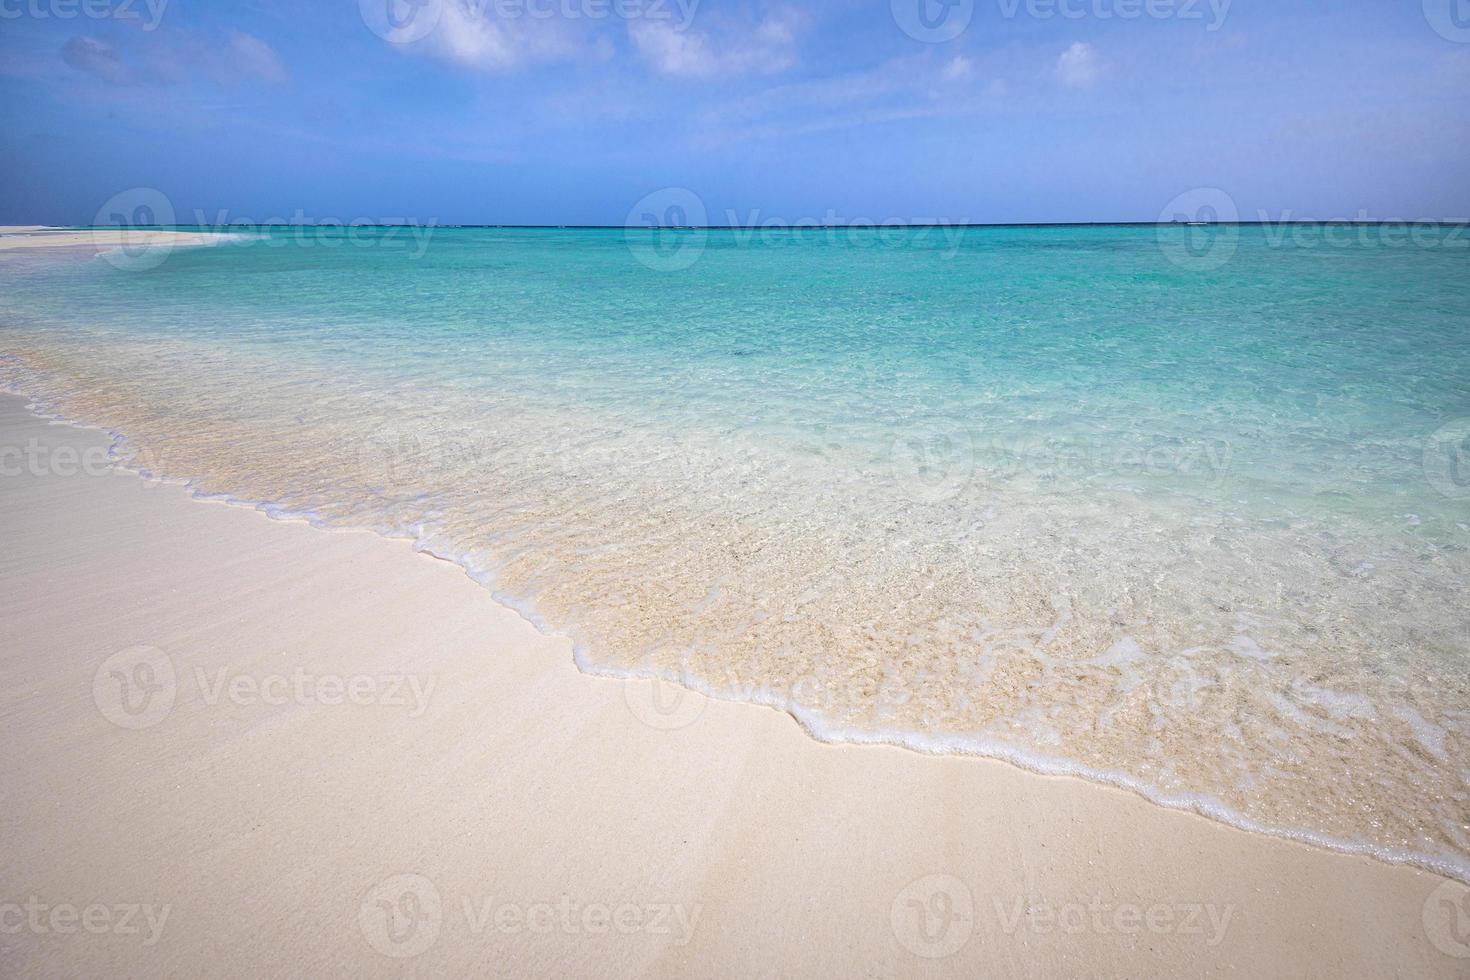 detailopname van zand Aan strand en blauw zomer lucht. panoramisch strand landschap. leeg tropisch strand en zeegezicht. helder zonnig lucht, zacht zand, rust, rustig ontspannende zonlicht, zomer humeur foto